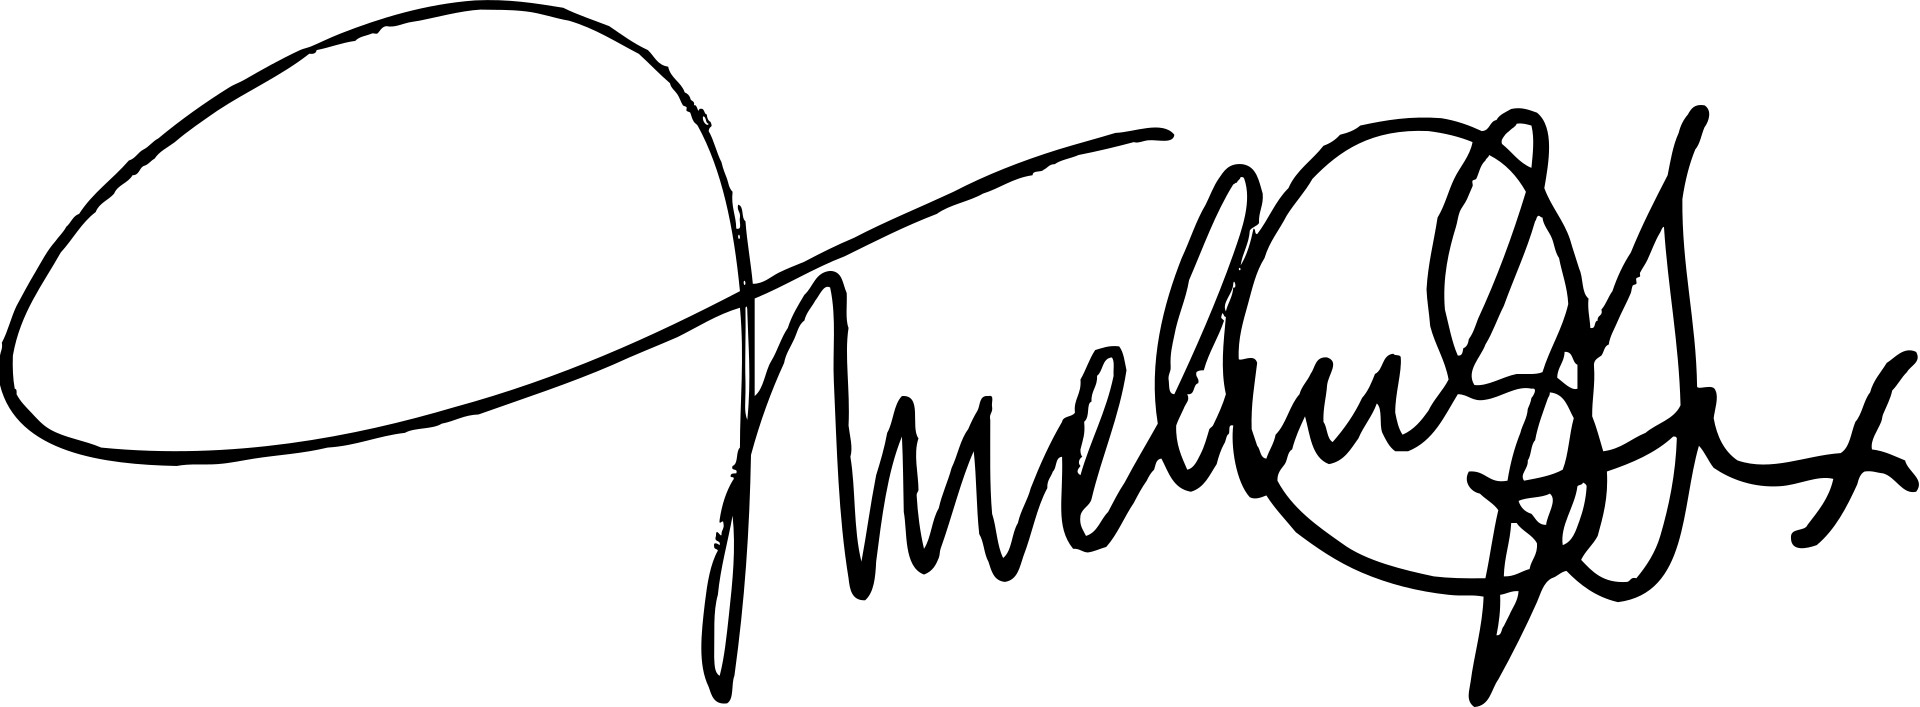 official signature of celebrity Michael J. Fox